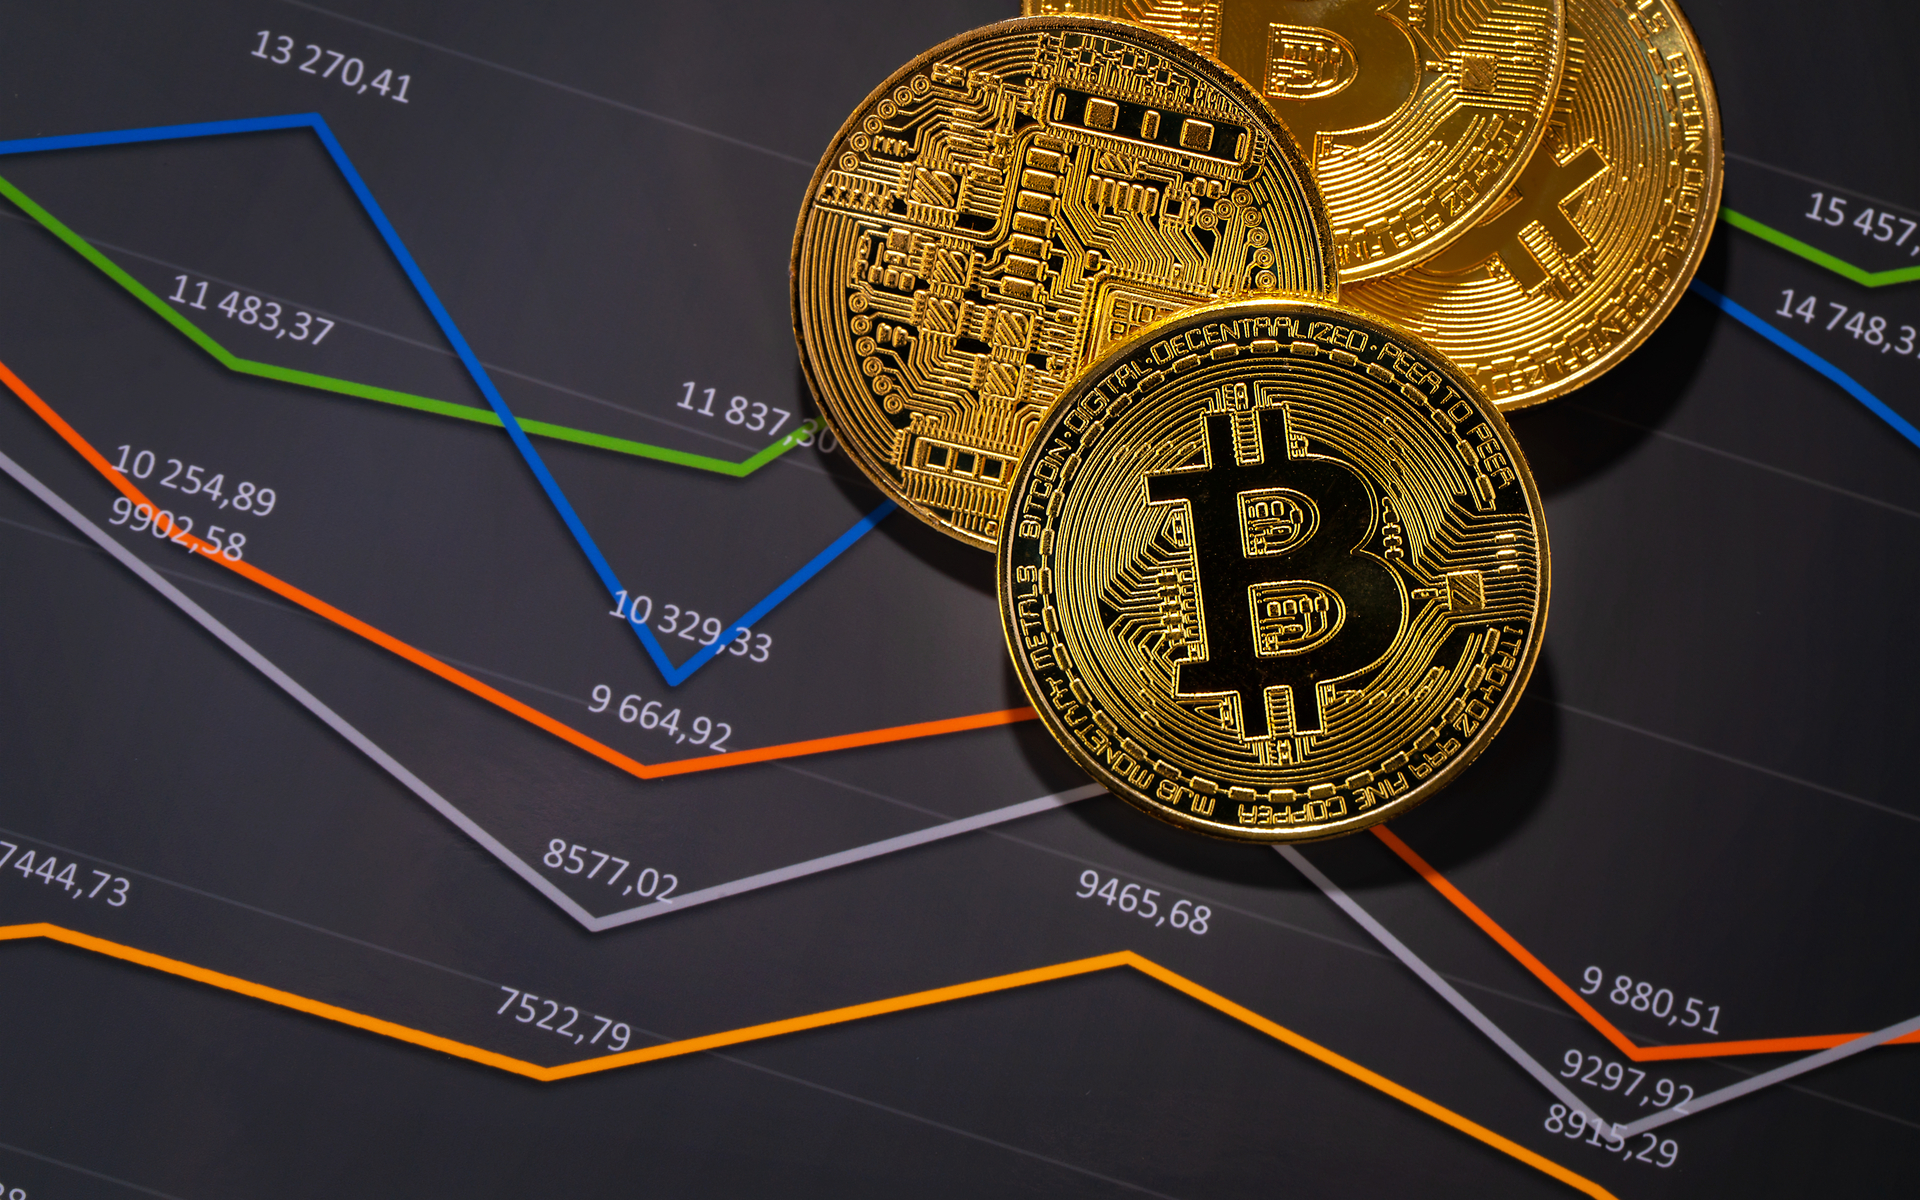 Bitcoin price shows correlation to global economic crisis